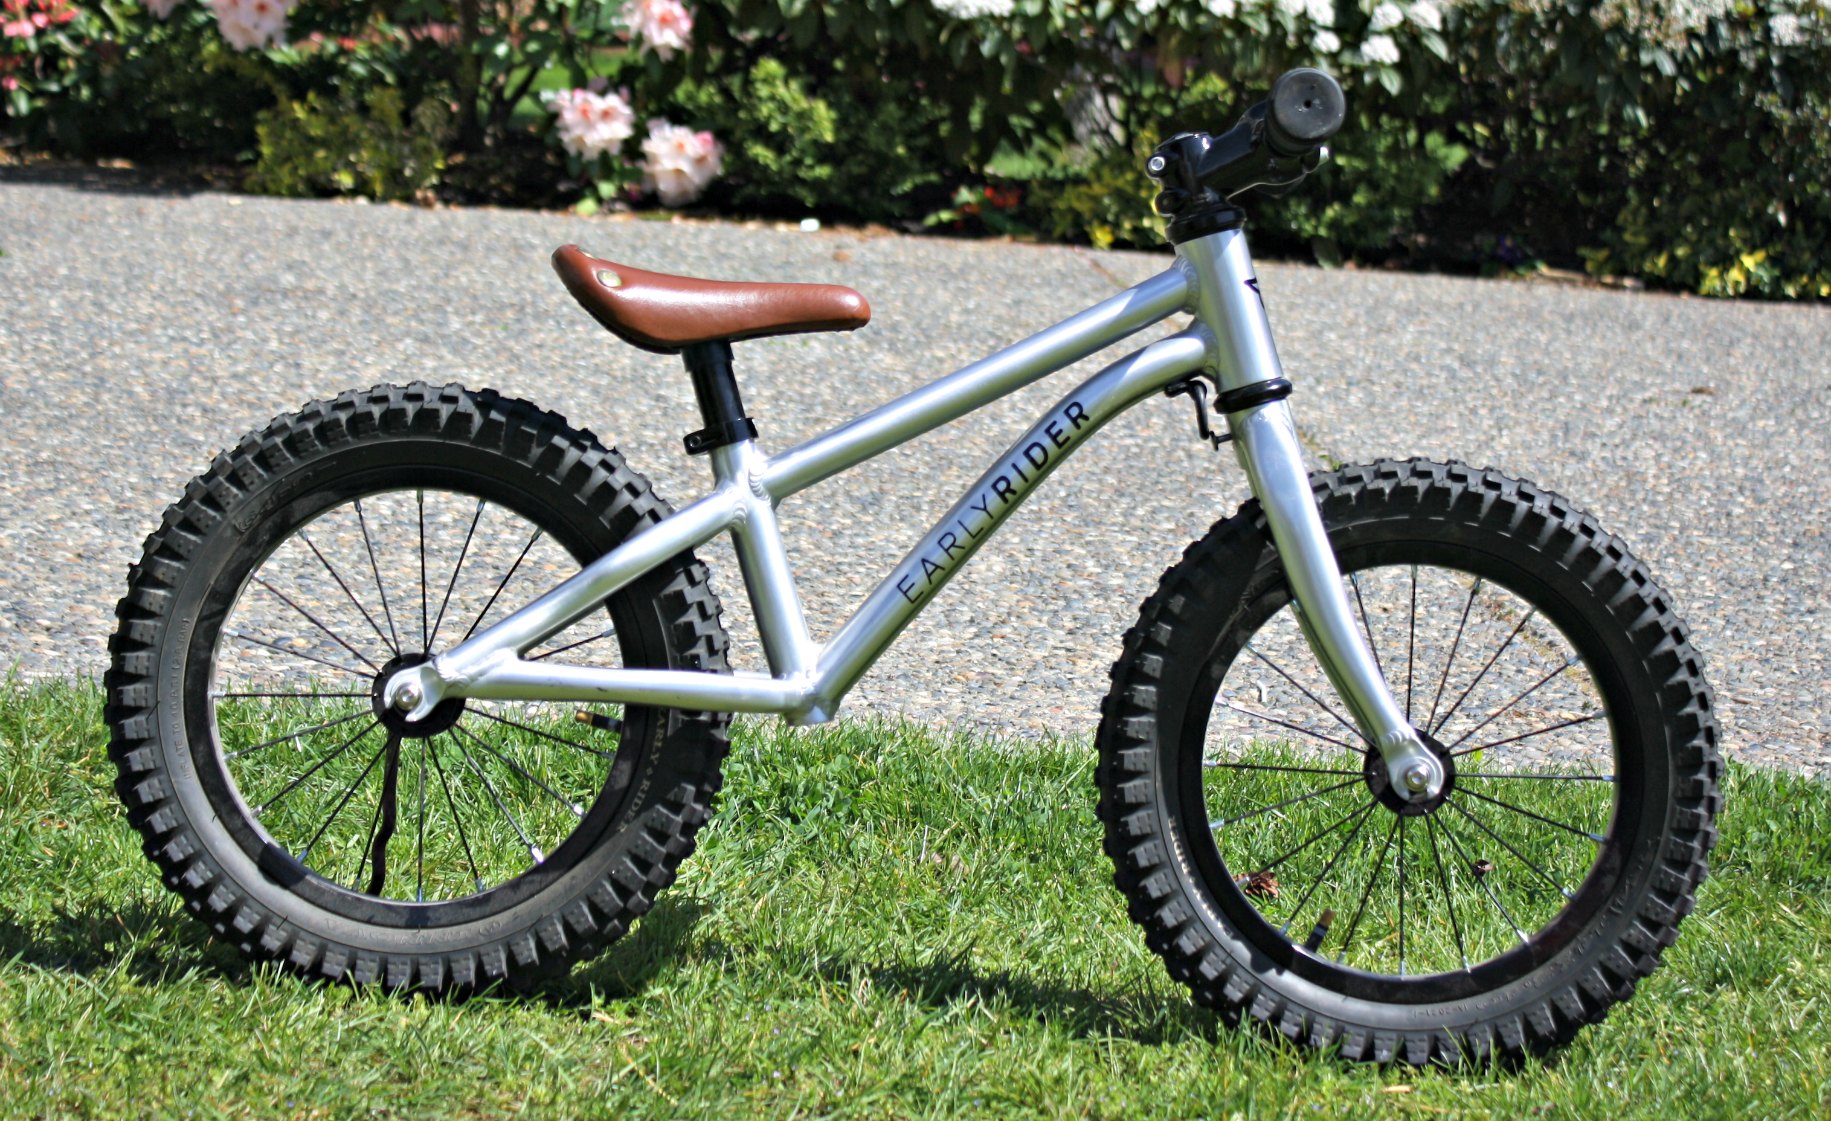 14 inch balance bike with brakes